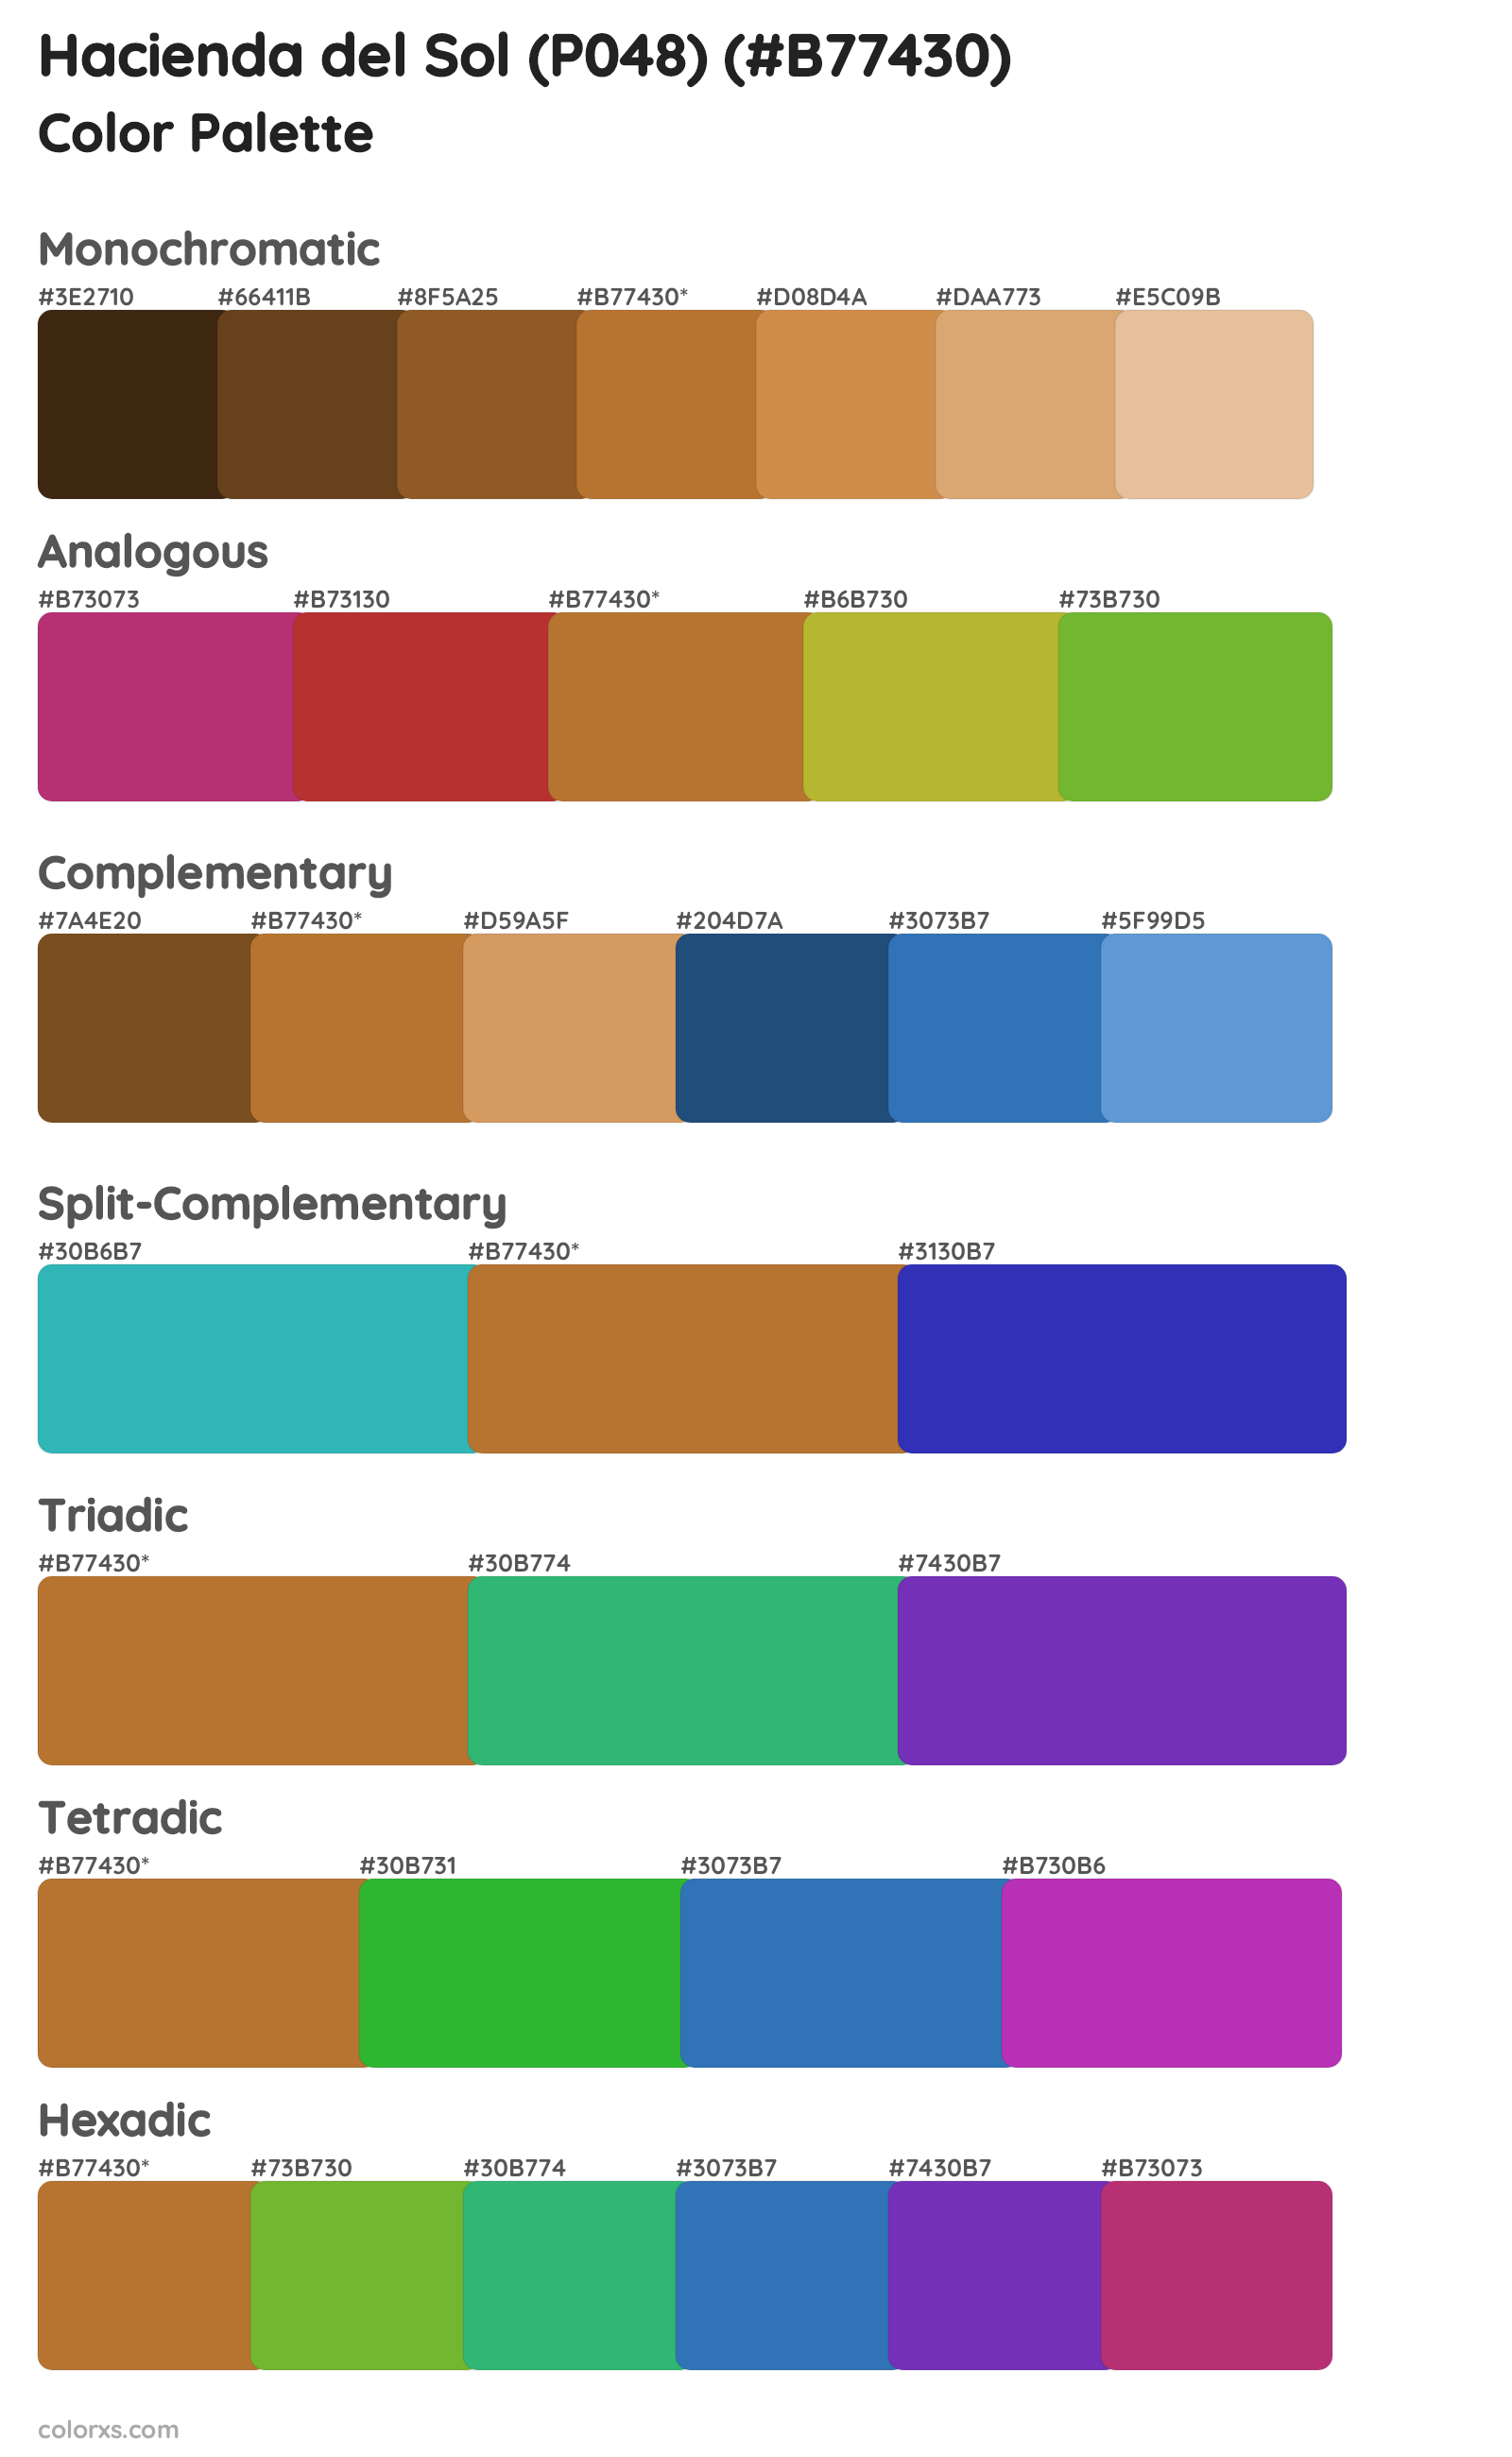 Hacienda del Sol (P048) Color Scheme Palettes